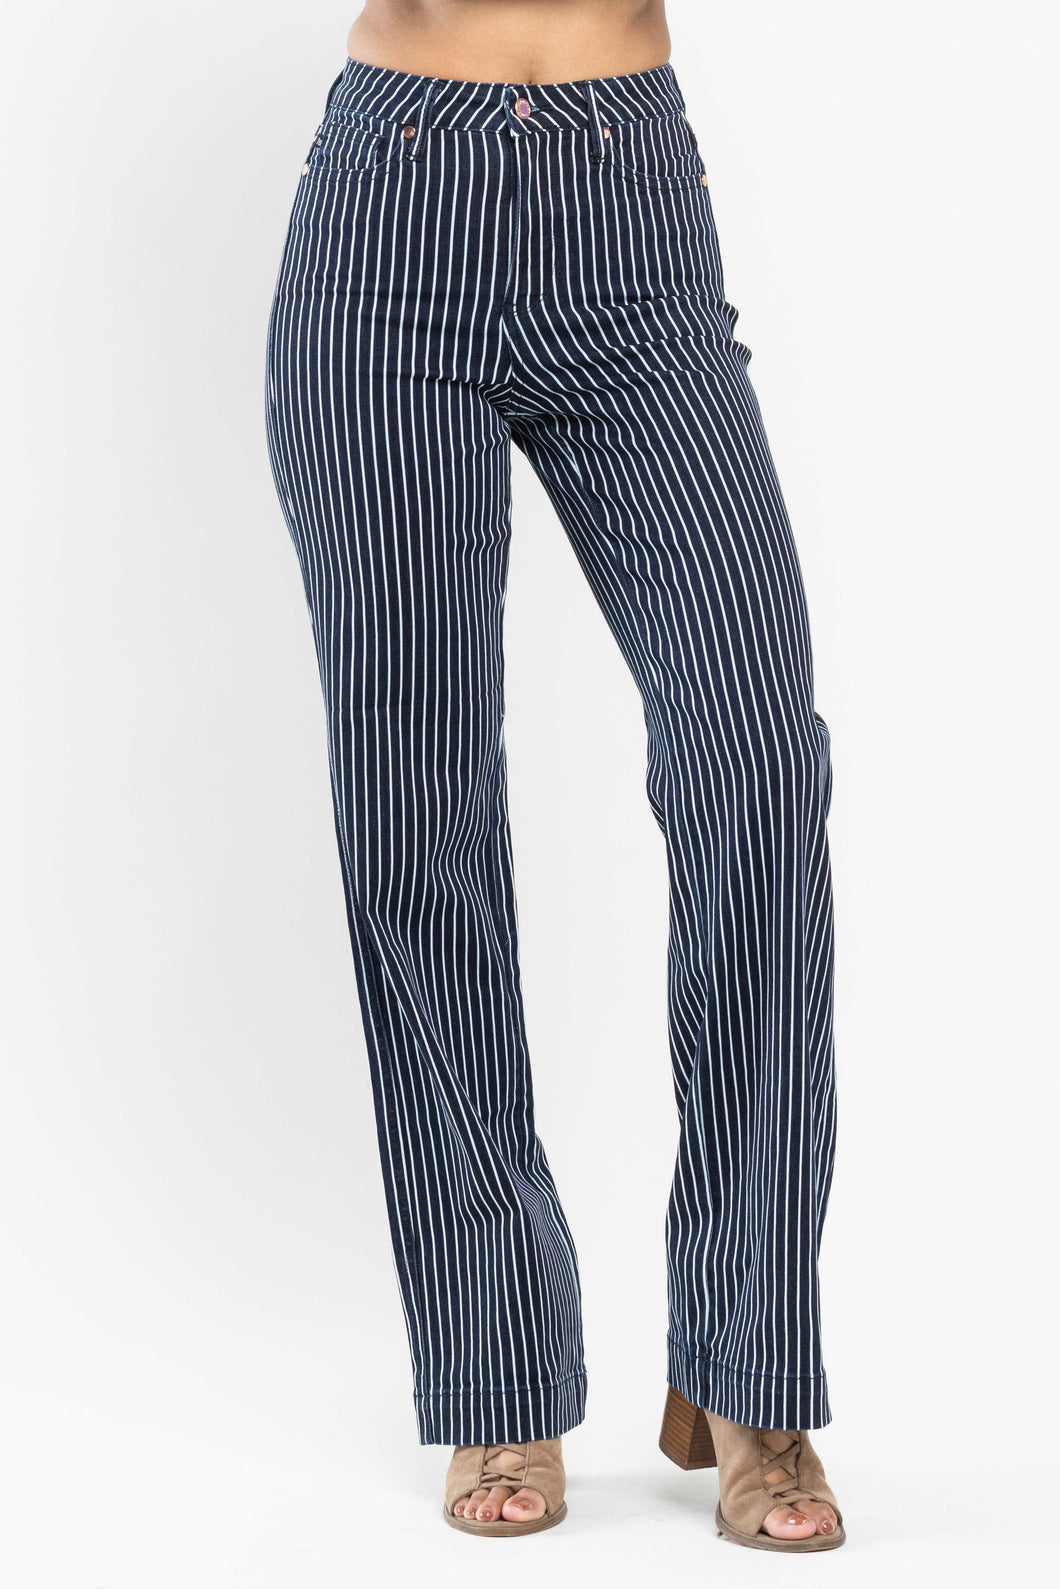 Dark White Tummy Control Striped Straight Fit Judy Blue Jeans 10/24/23 7255